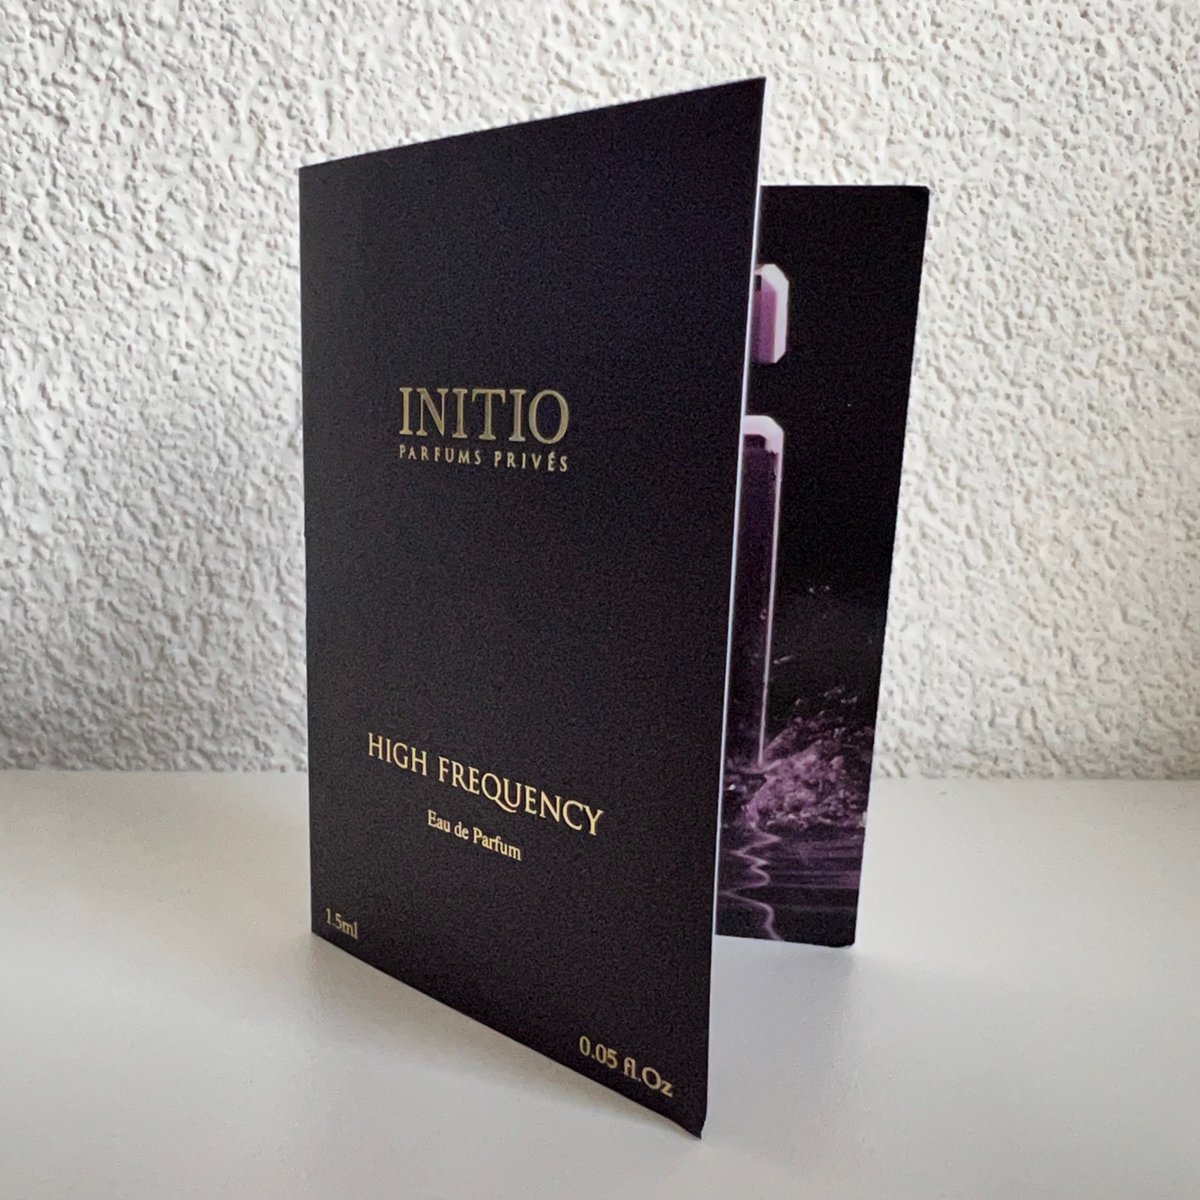 Initio - High Frequency - 1,5 ml Original Sample